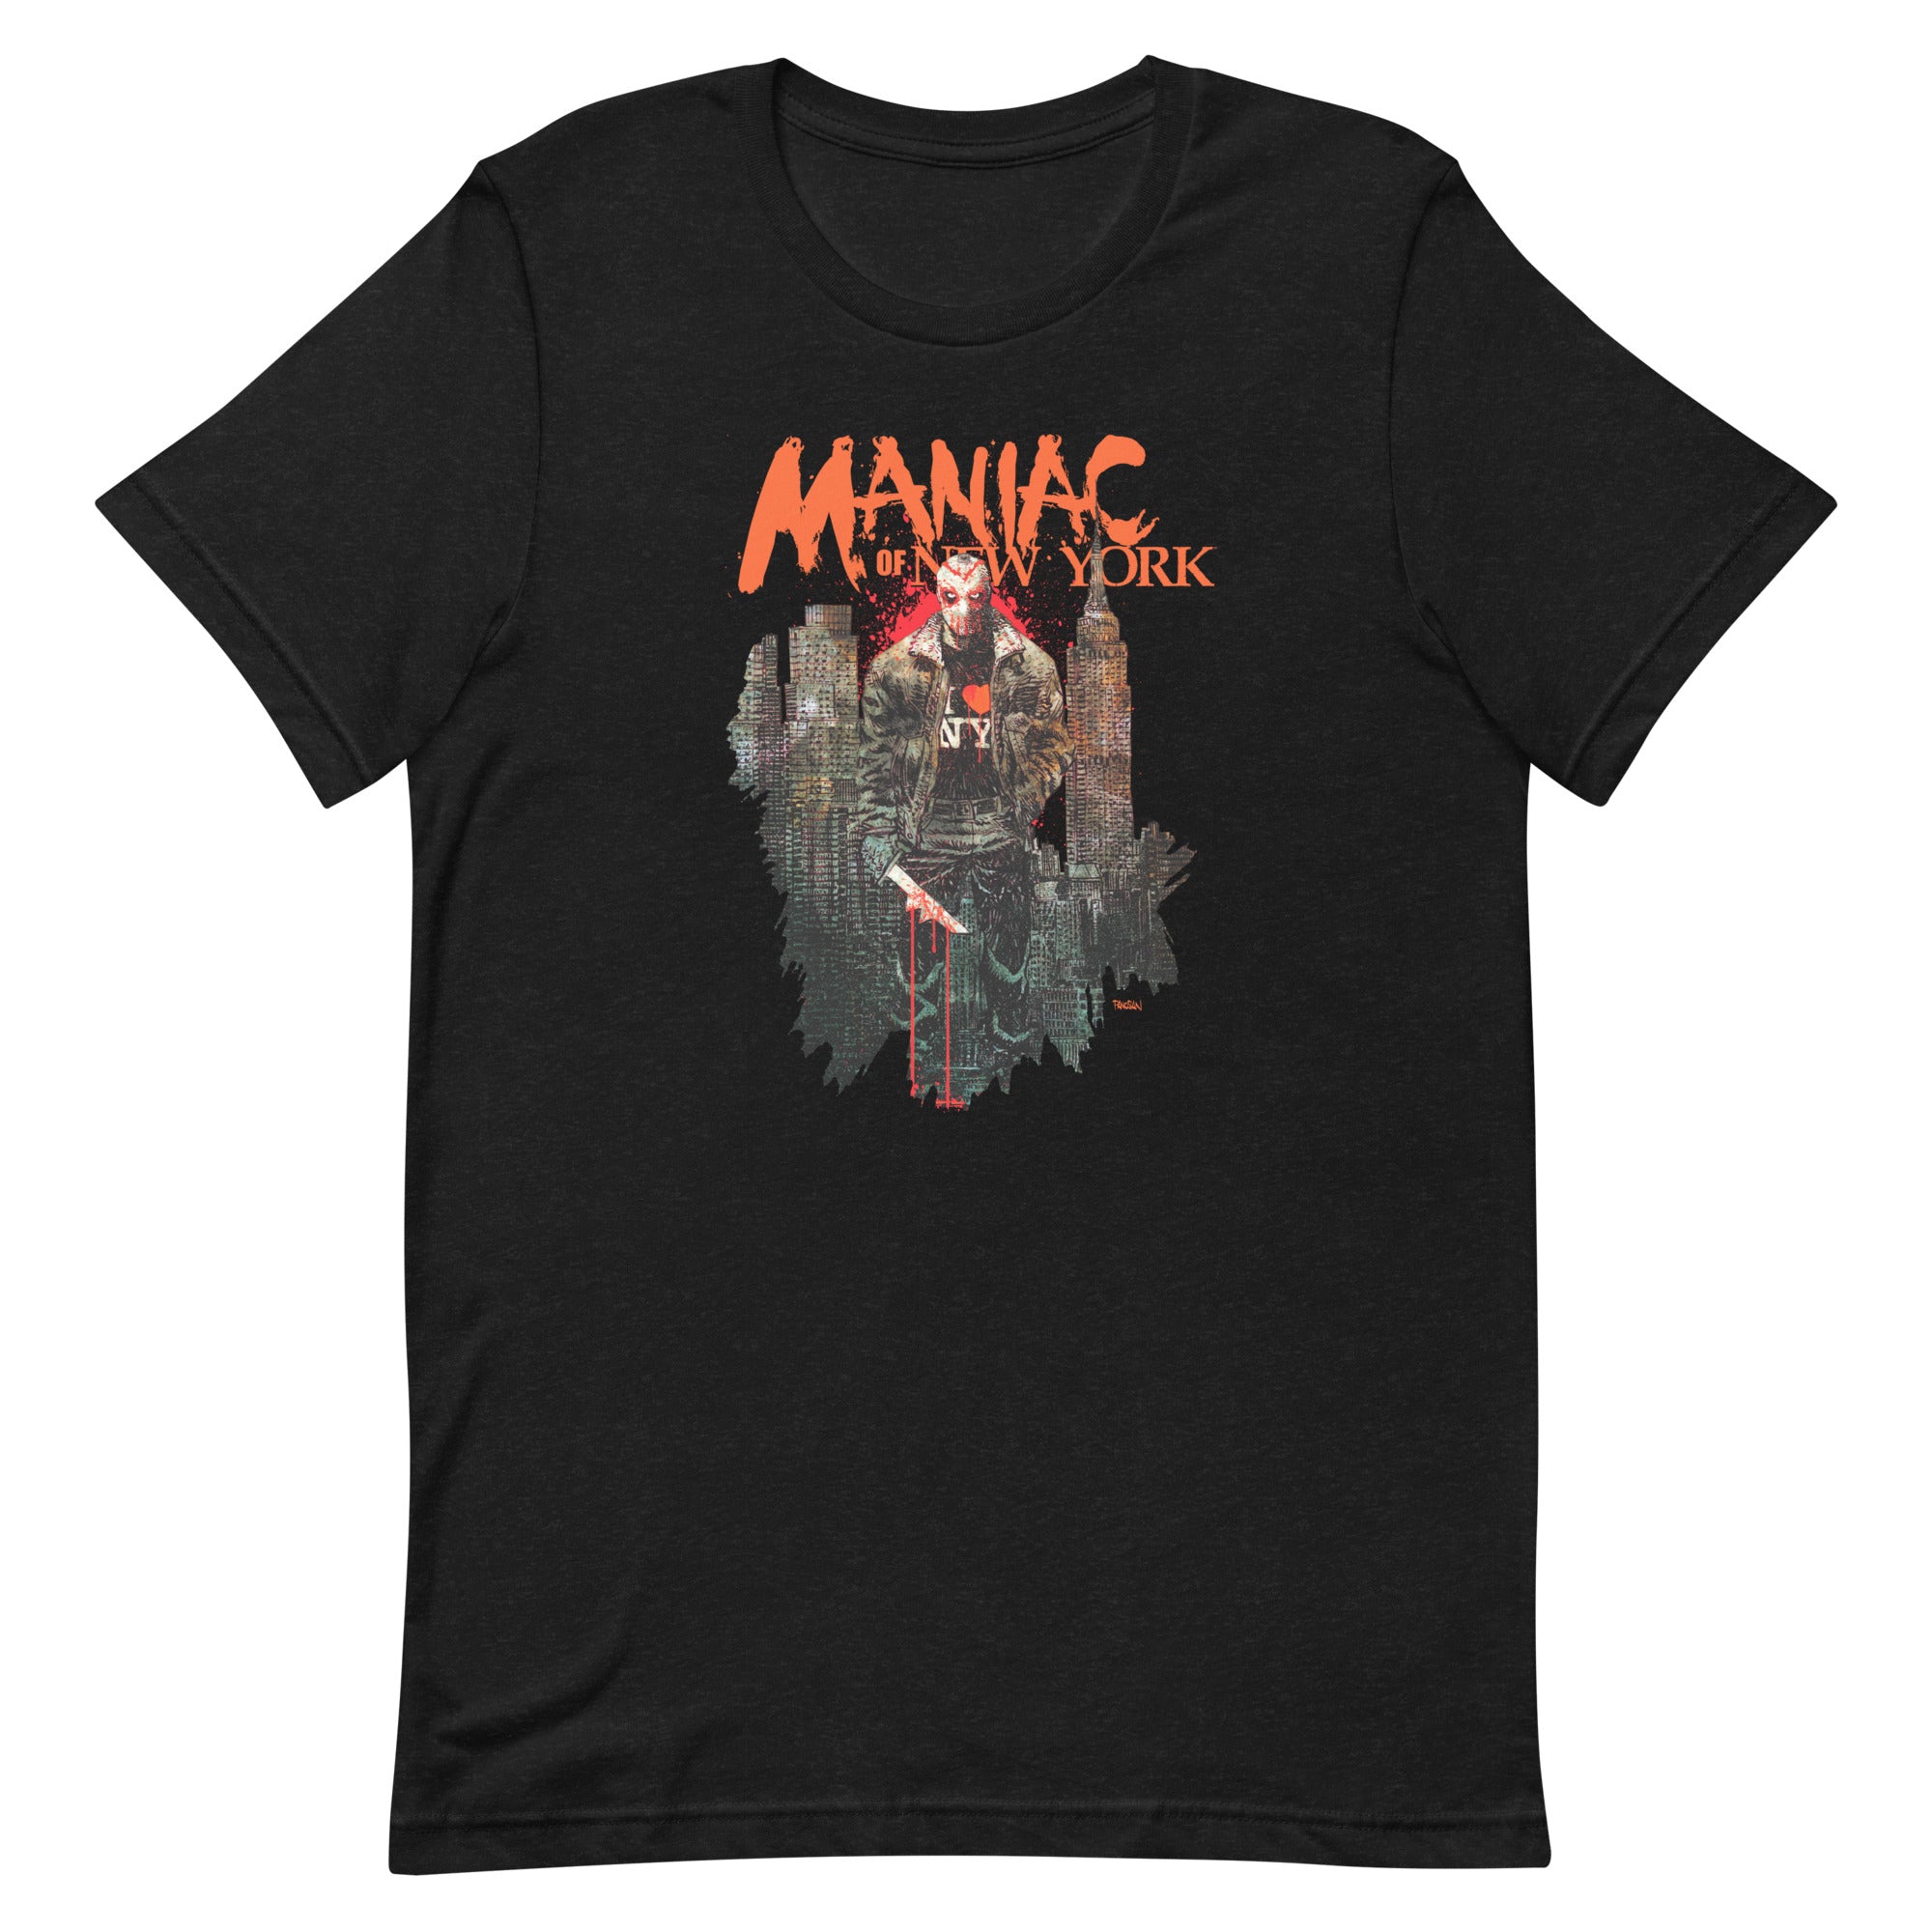 Maniac of New York Unisex T-shirt